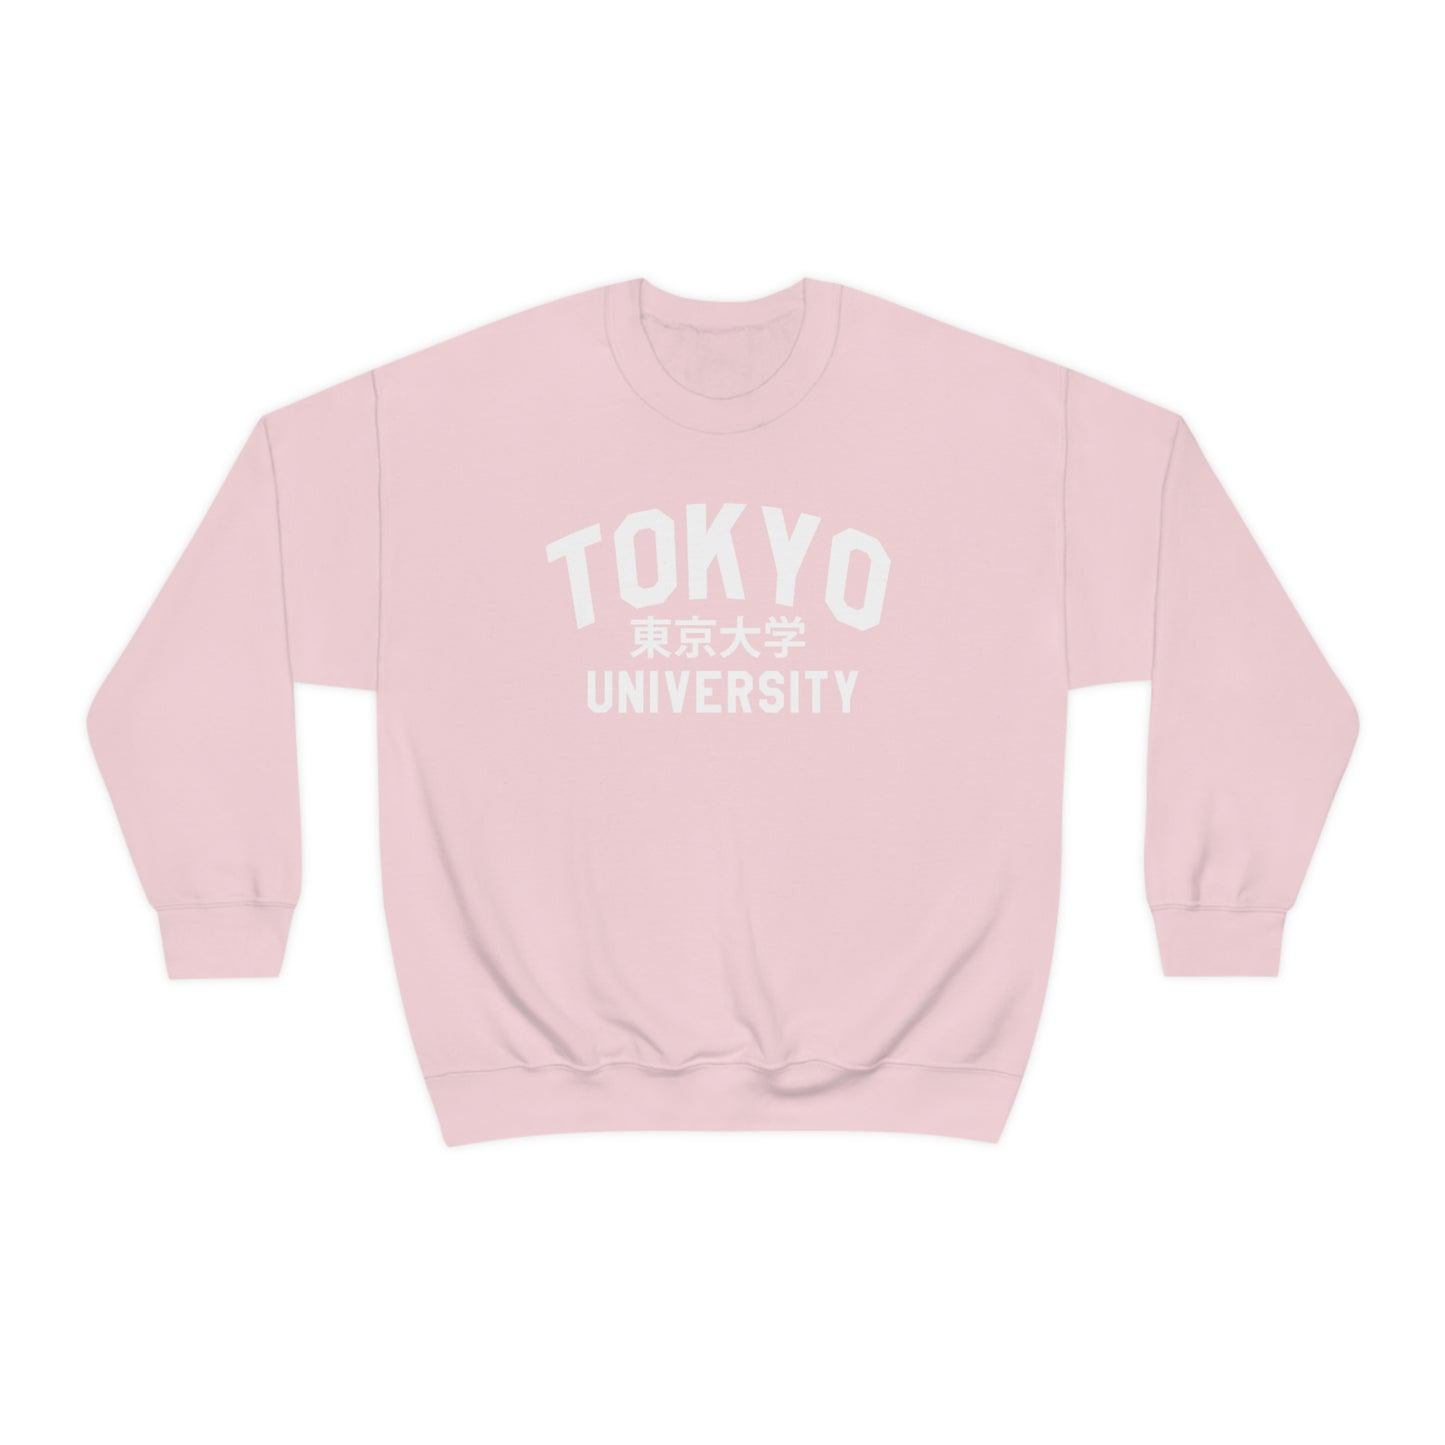 Tokyo University College Sweater Minimalist Crewneck Sweatshirt for Men and Women Souvenir Japan Colleges